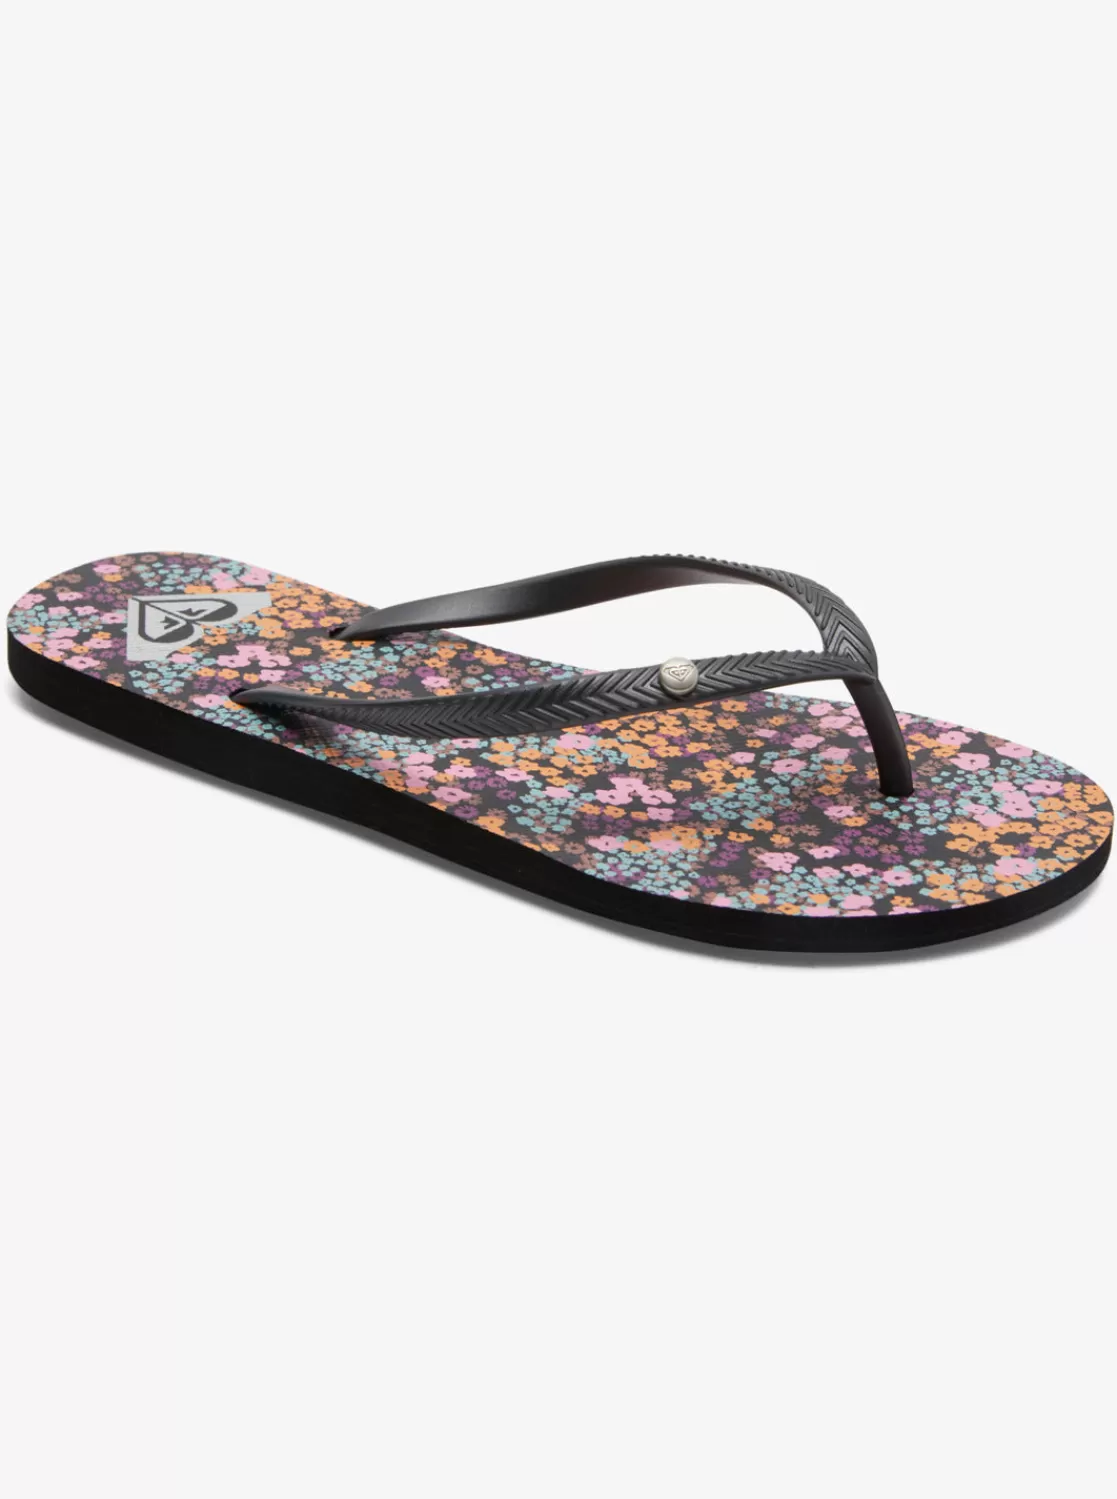 Bermuda Sandals-ROXY Sale